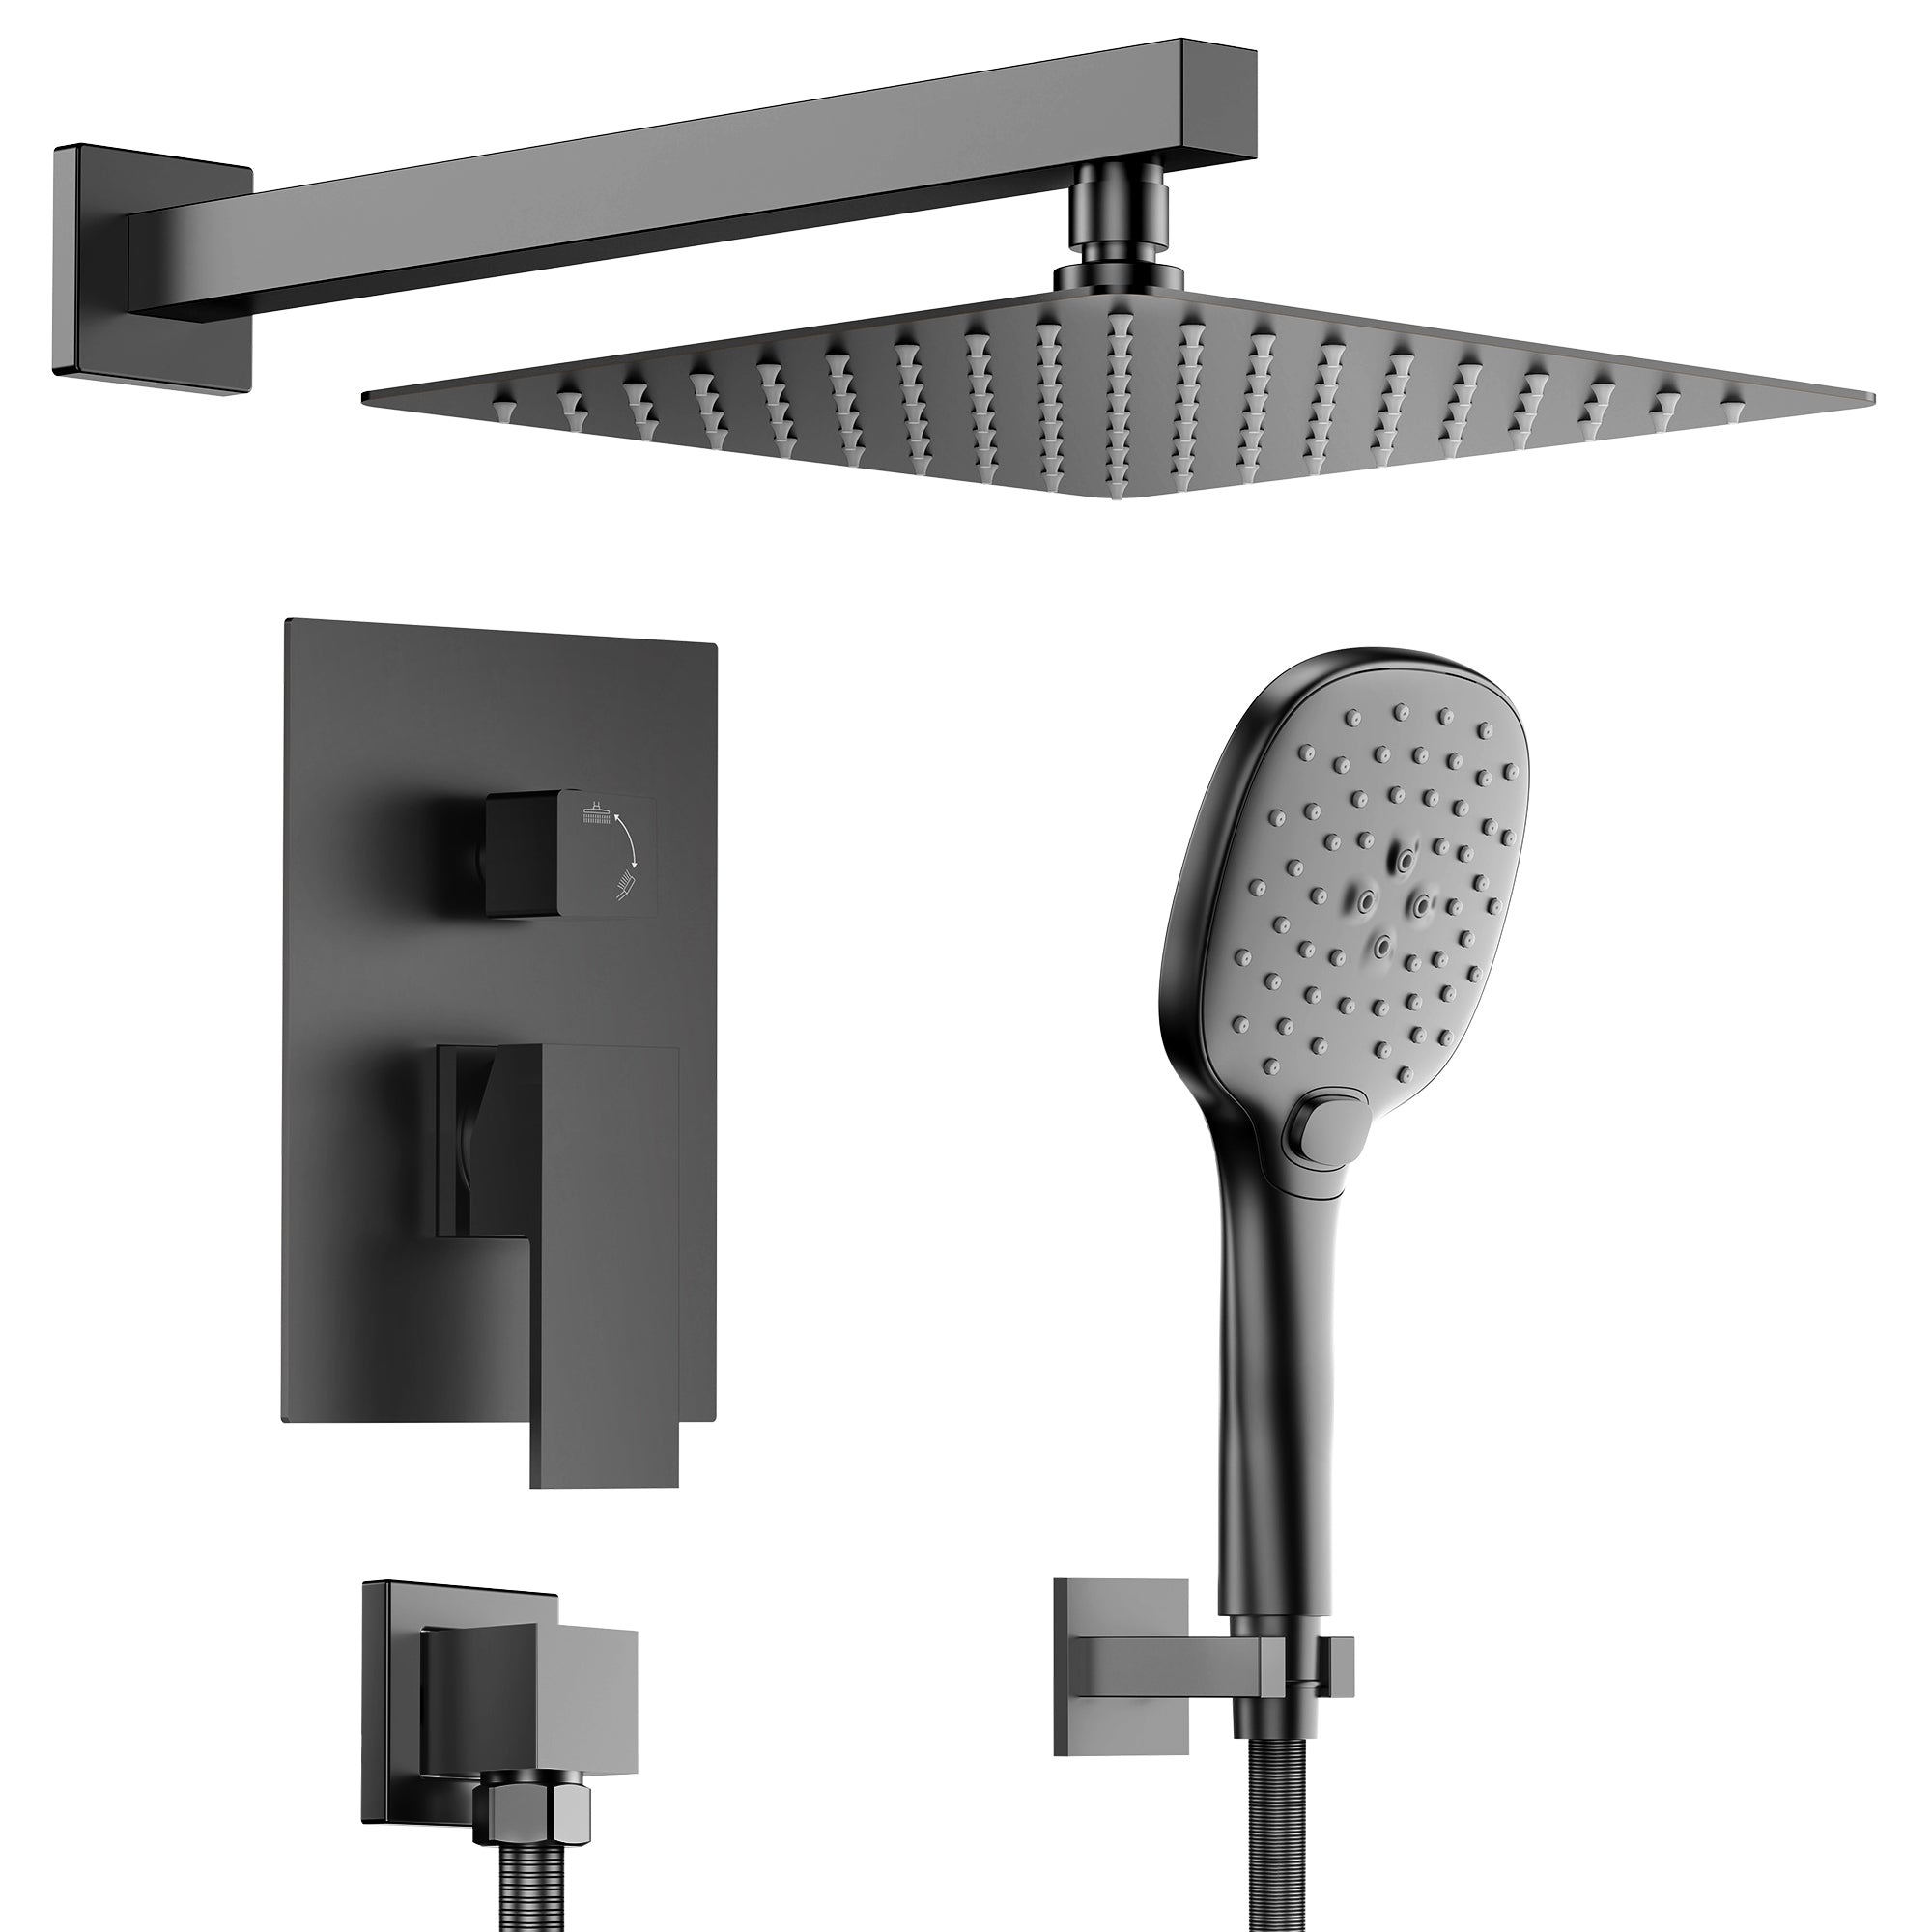 EVERSTEIN Matte Black Square Rain Shower Head System - 10" Ceiling Rainfall, Handheld Spray, Wall Mounted Bathroom Faucet Set